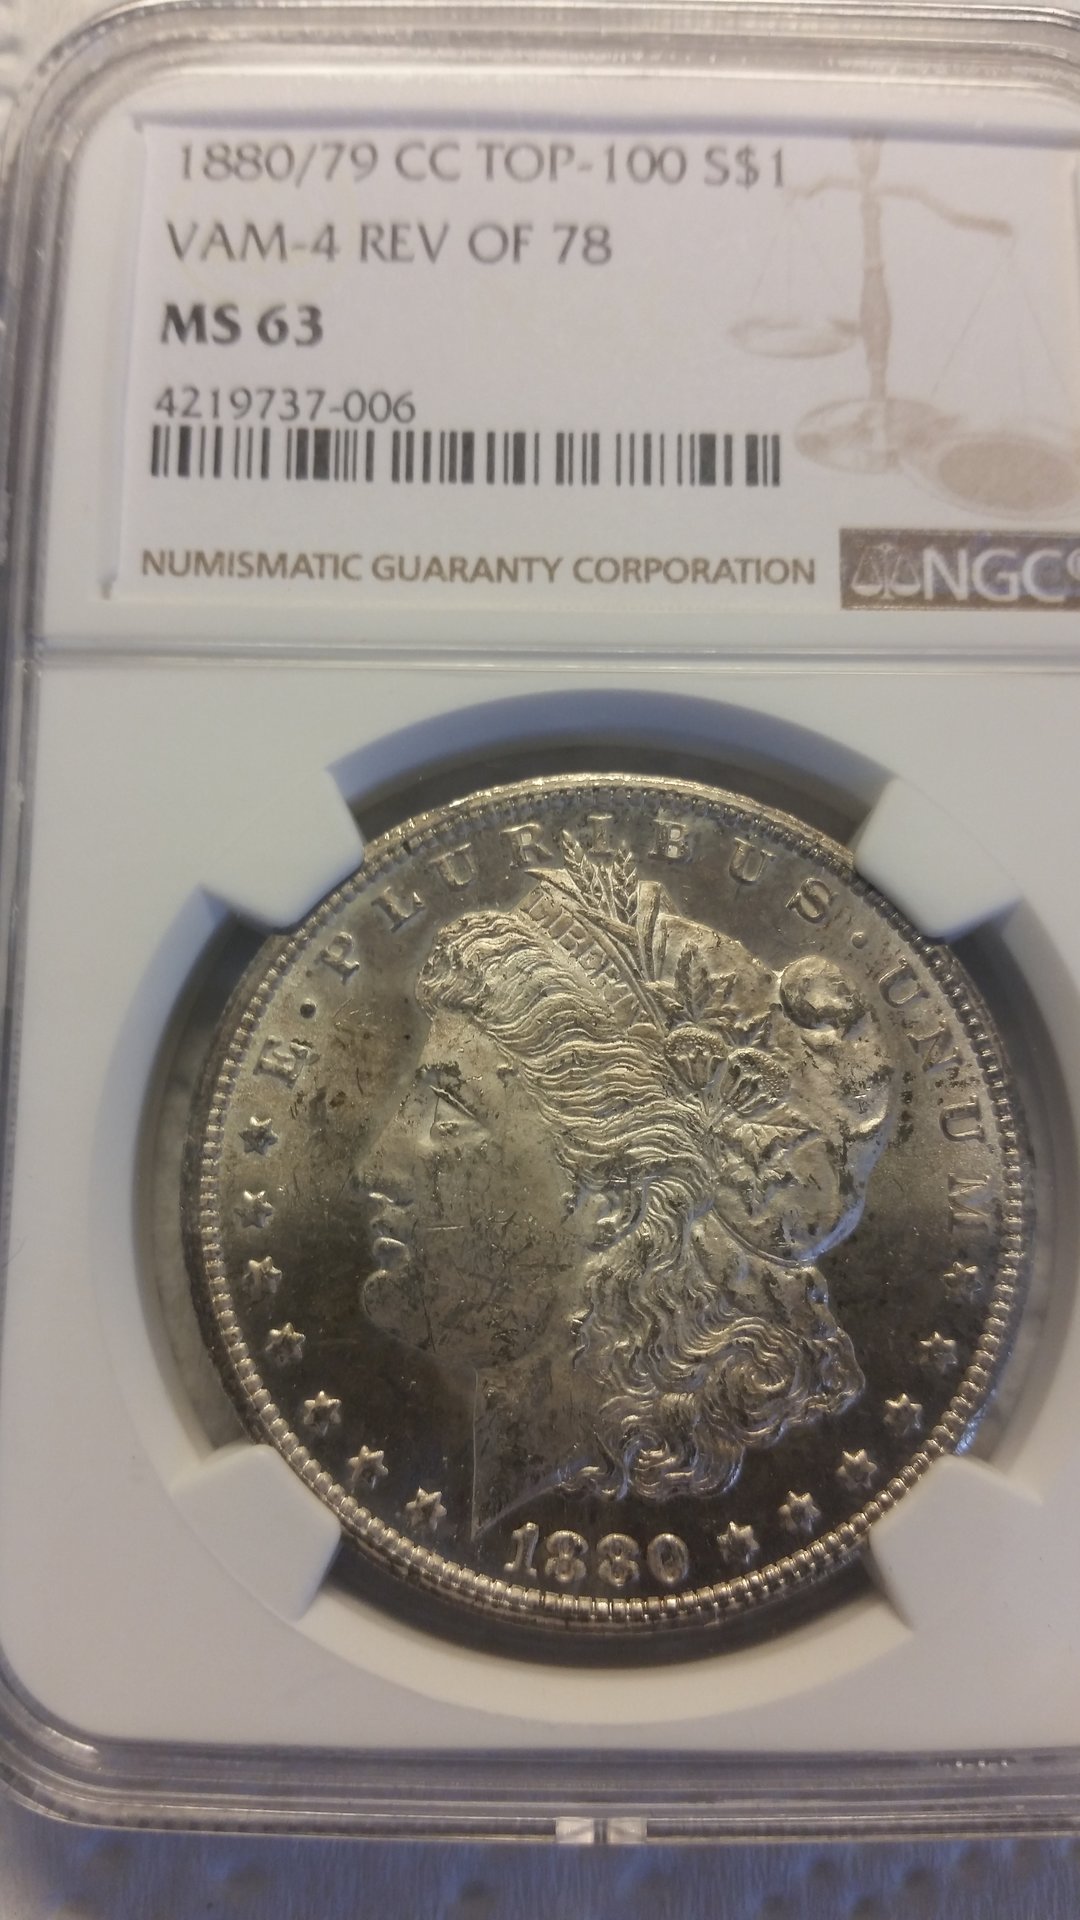 1880 79 CC VAM4 my coin.JPG